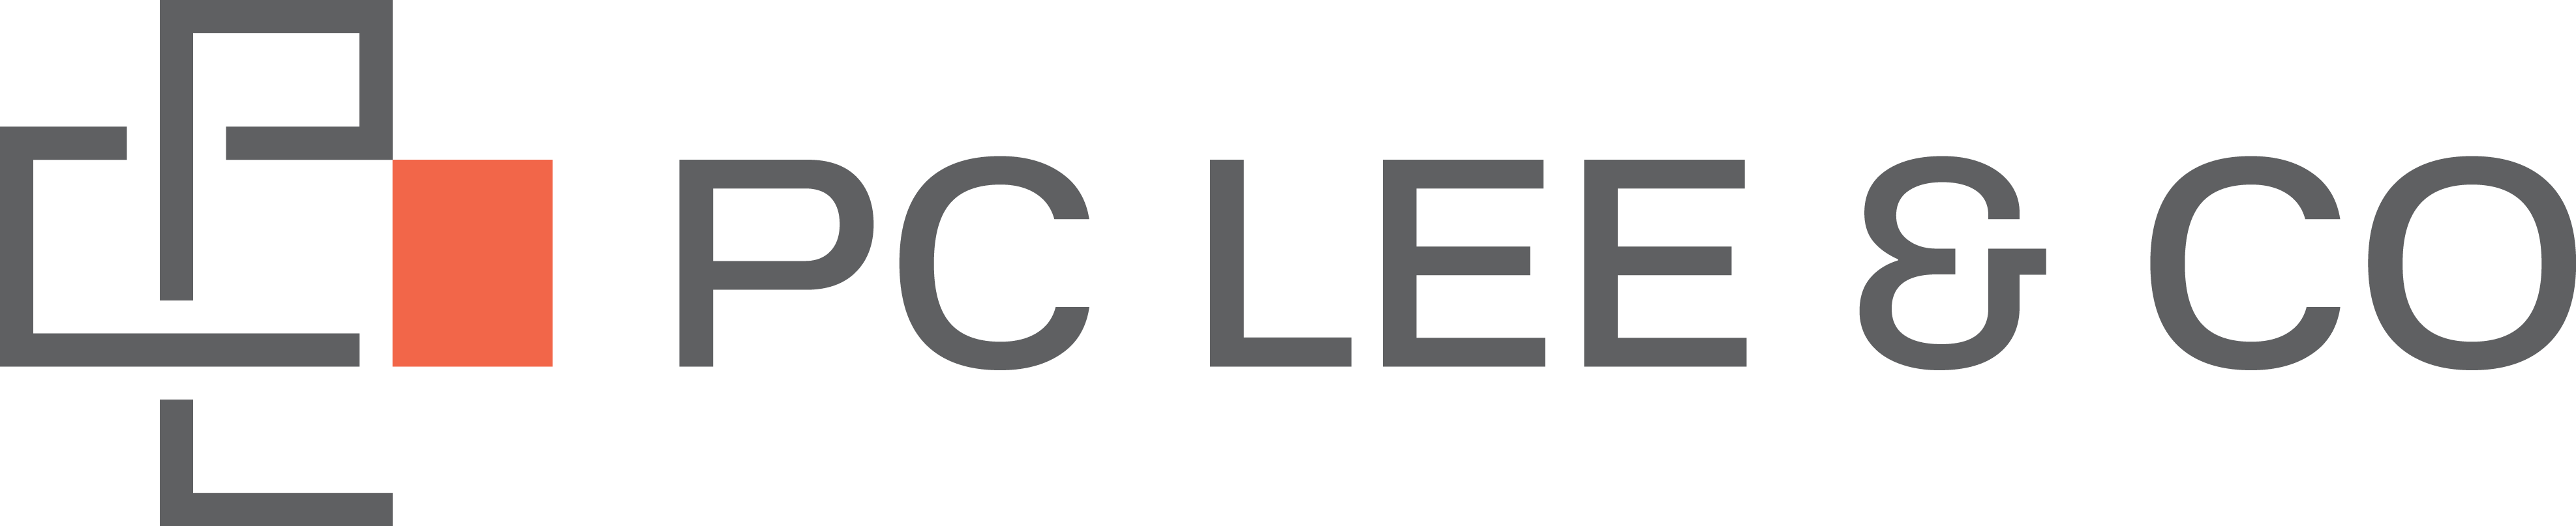 PC Lee & Co Logo